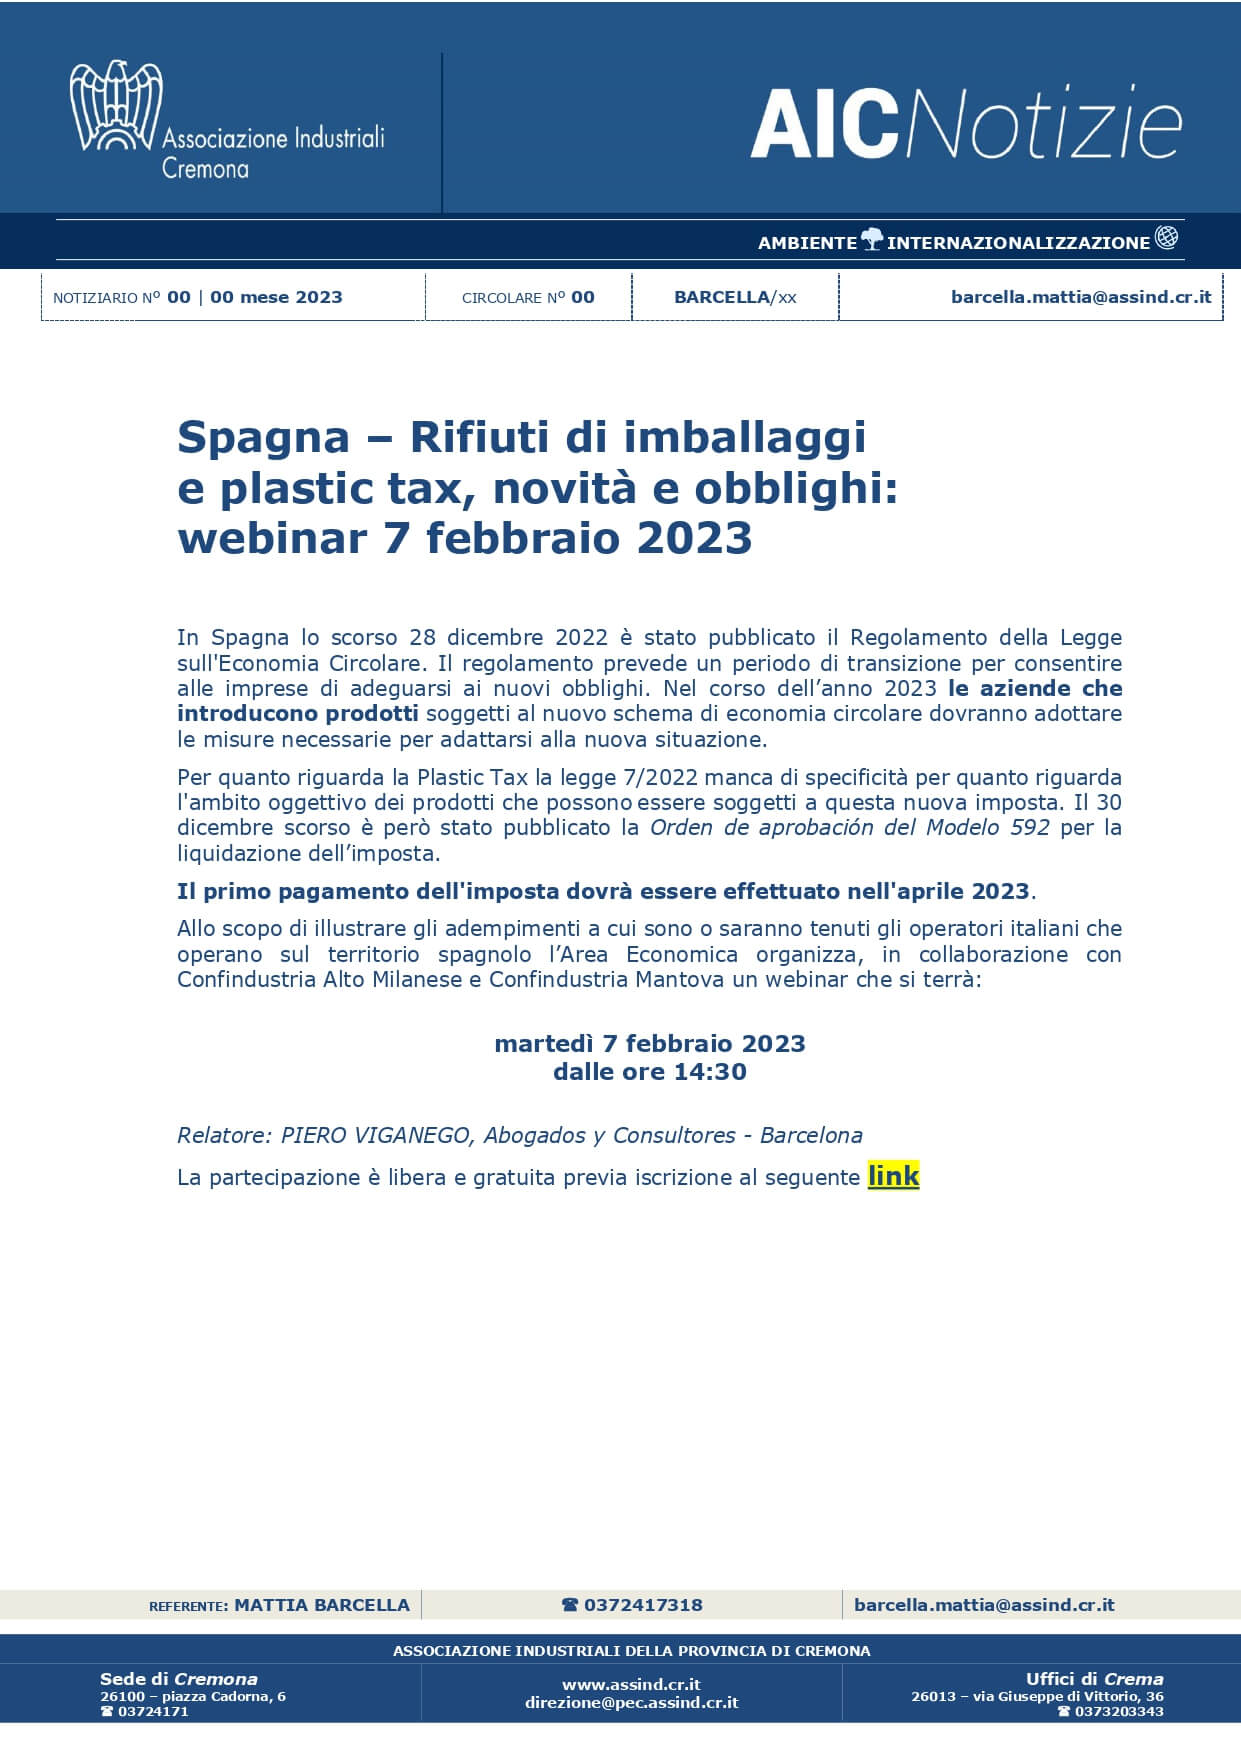 PDF ASSOCIAZIONE INDUSTRIALI DELLA PROVINCIA DI CREMONA: Piero Viganego participates in Cremona as a speaker in a webinar on the Plastic Packaging Tax in Spain and the Circular Economy